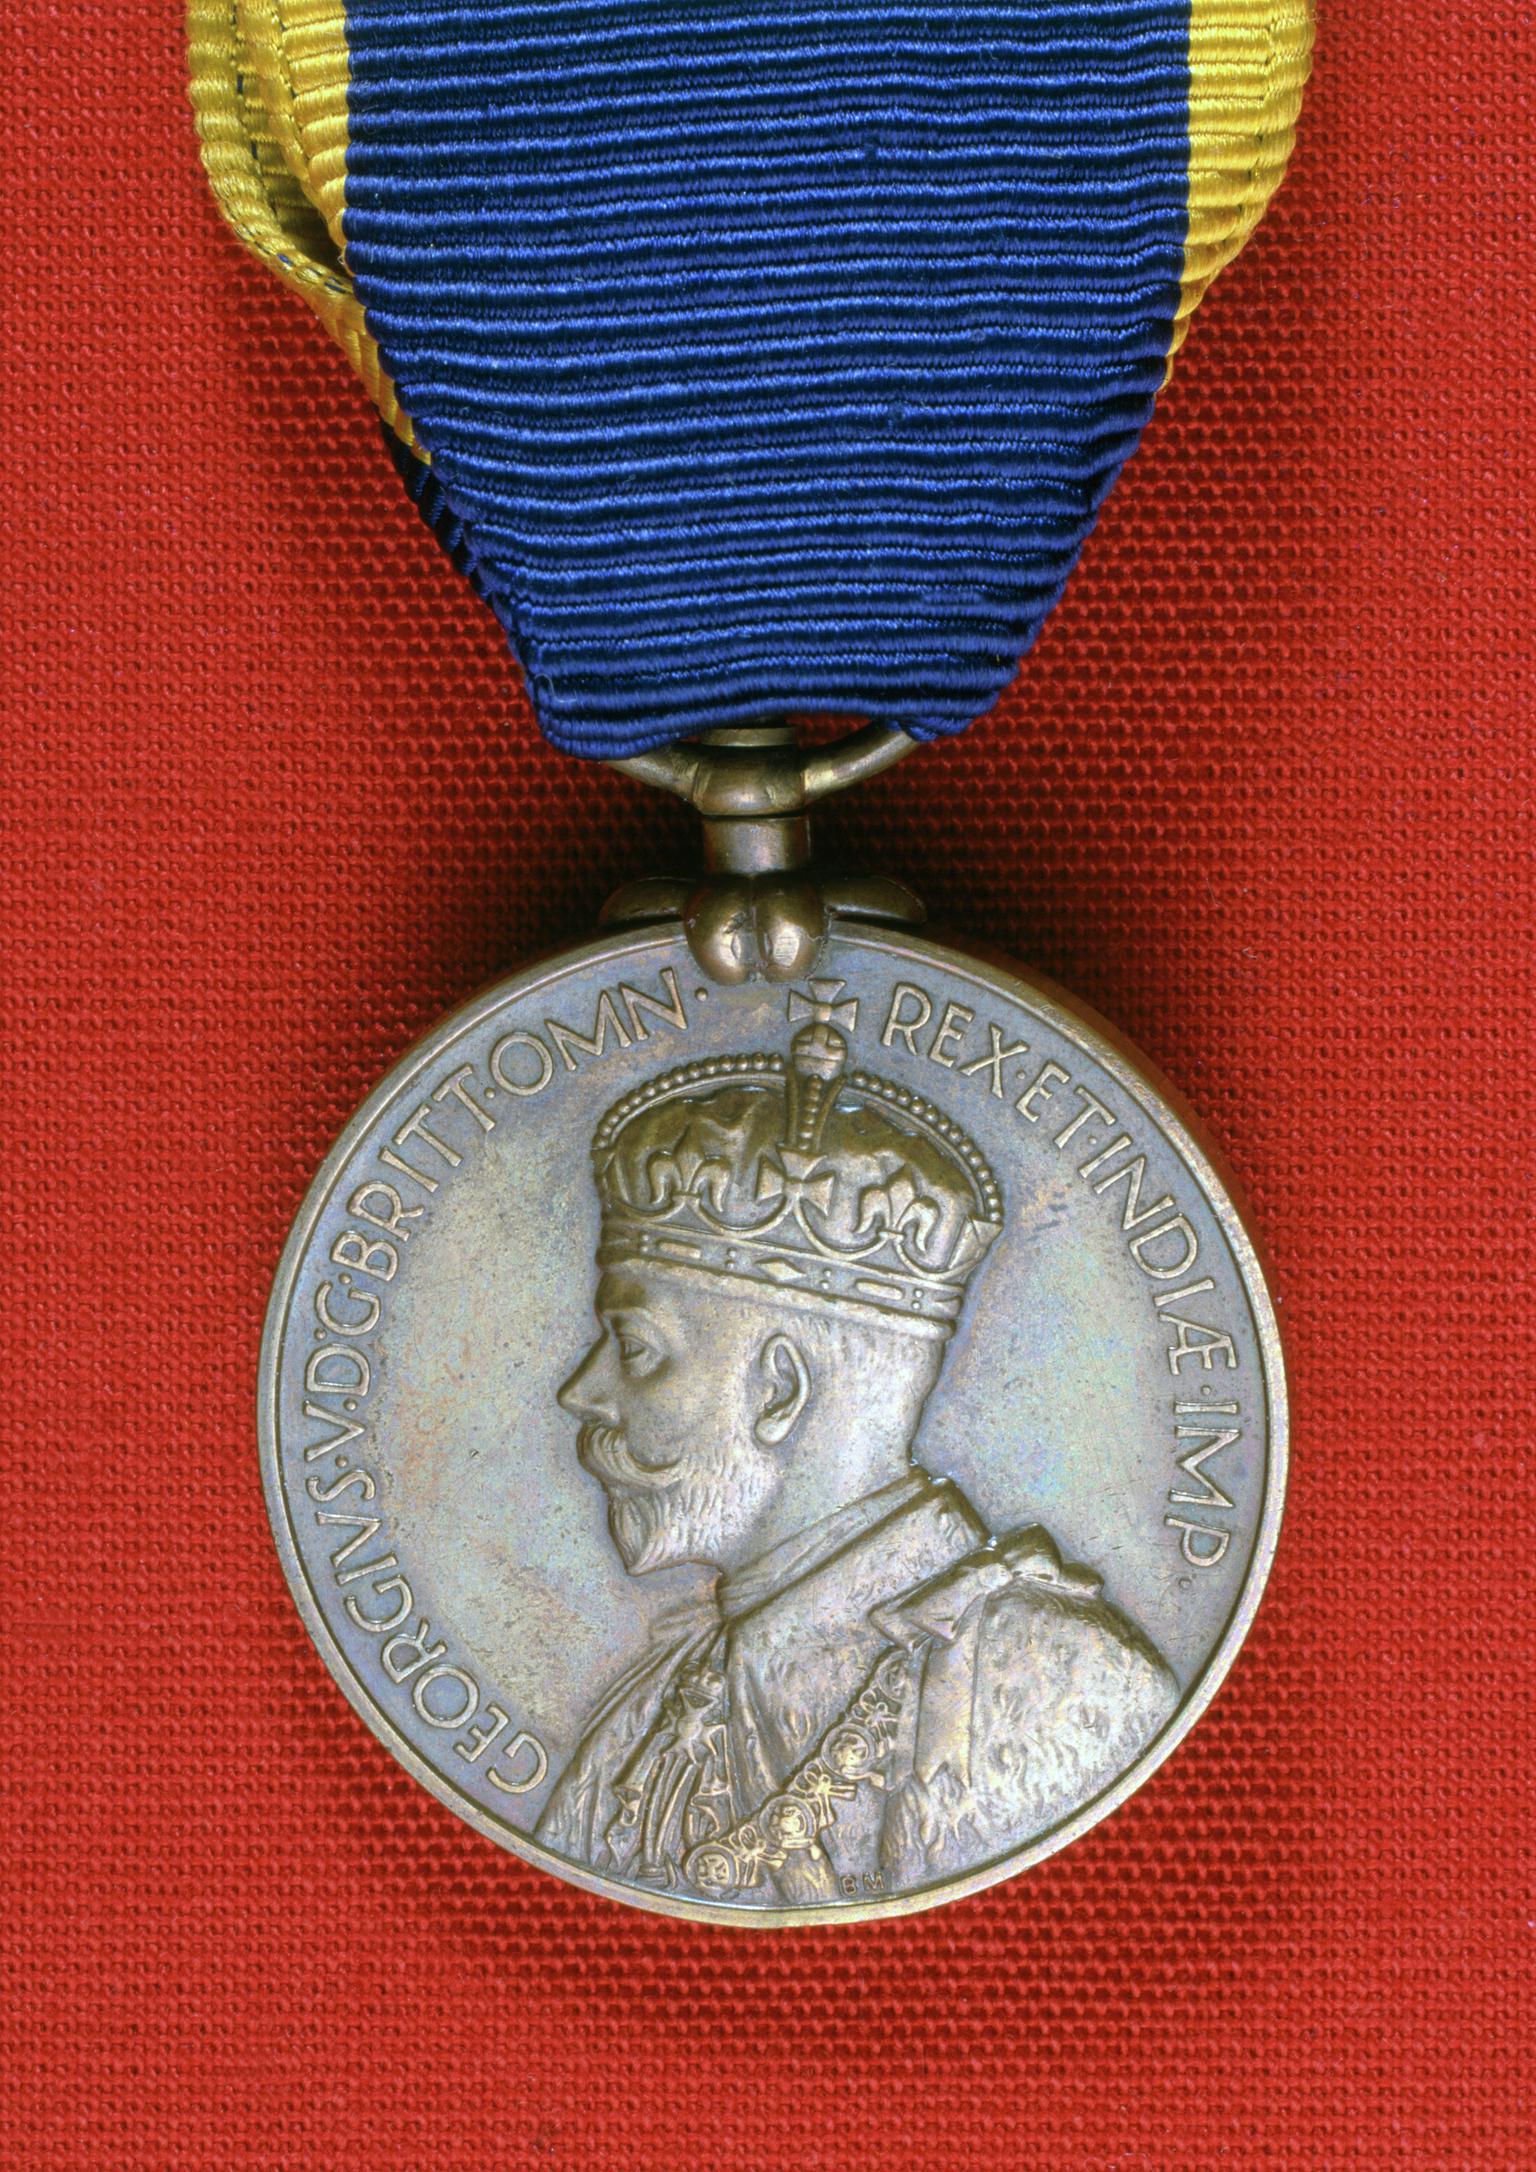 Edward Medal (mines)